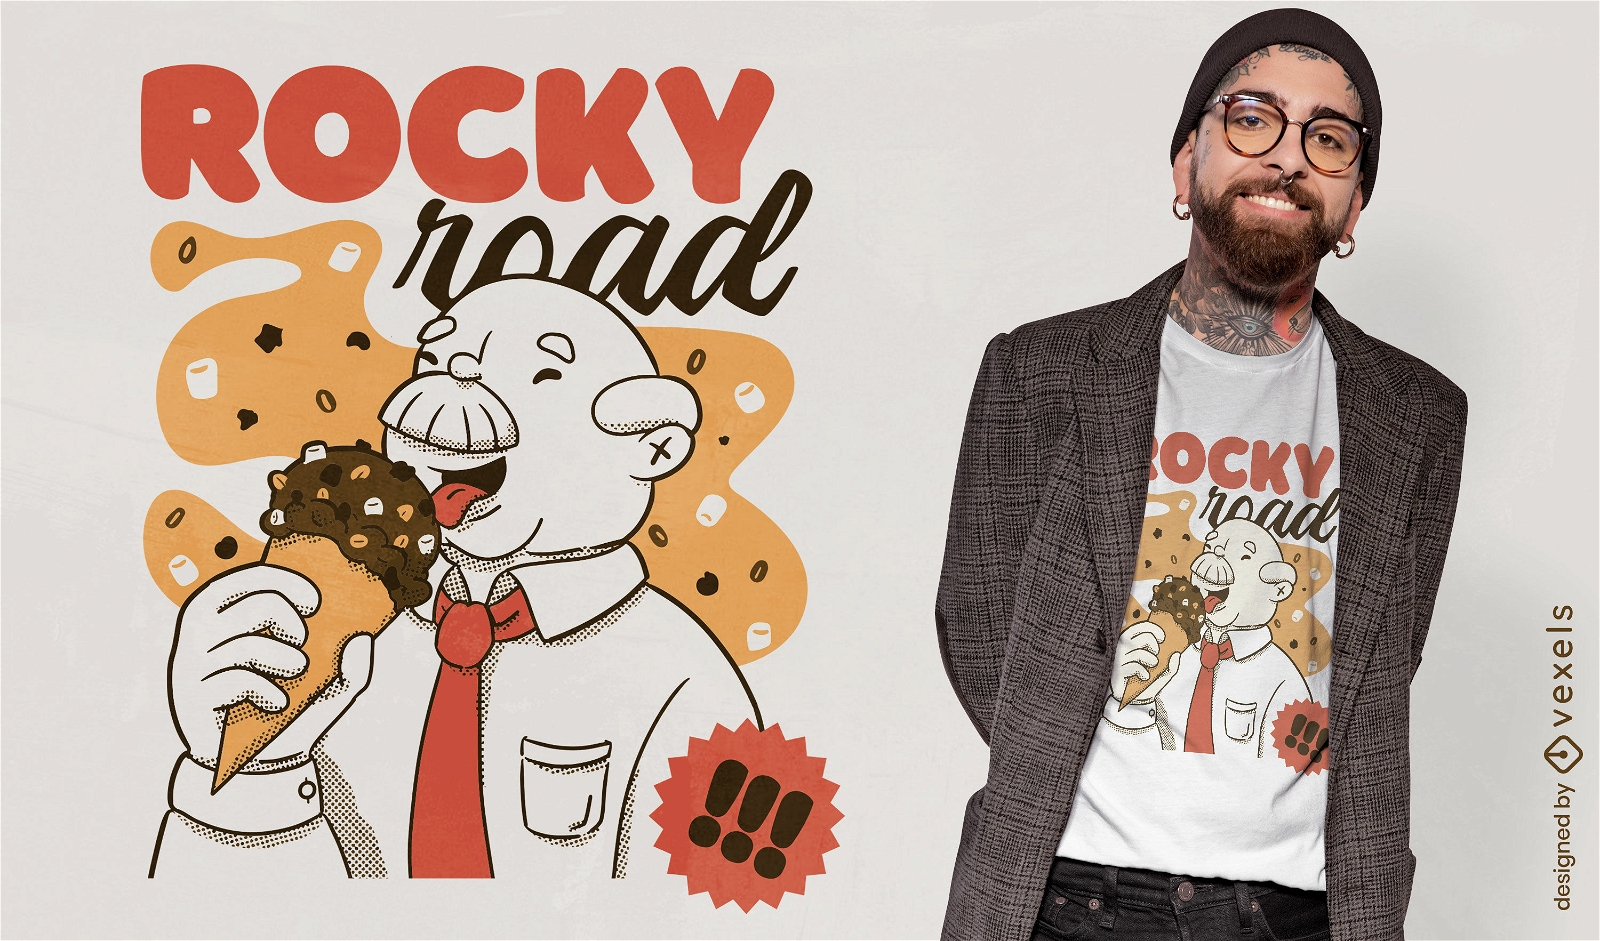 Rocky road ice cream t-shirt design